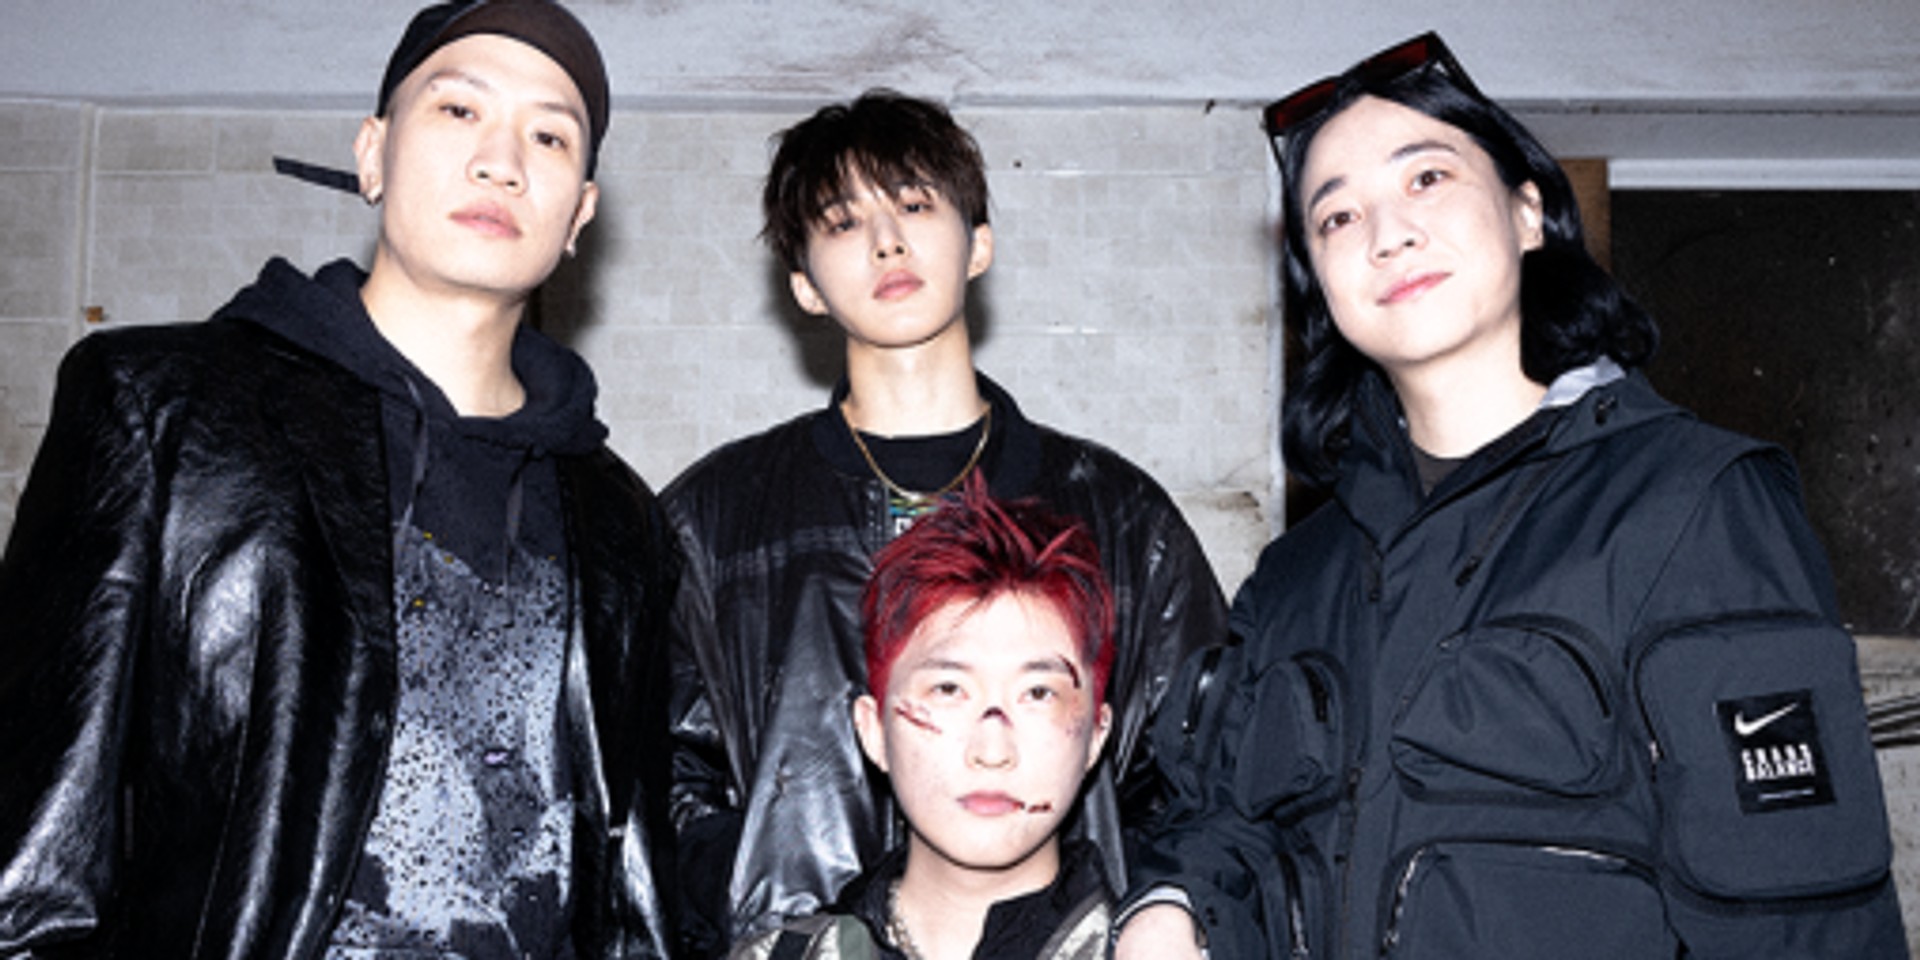 Padi teams up with B.I, Gaeko, Nucksal, and Kid Milli on single 'Handsome' — listen